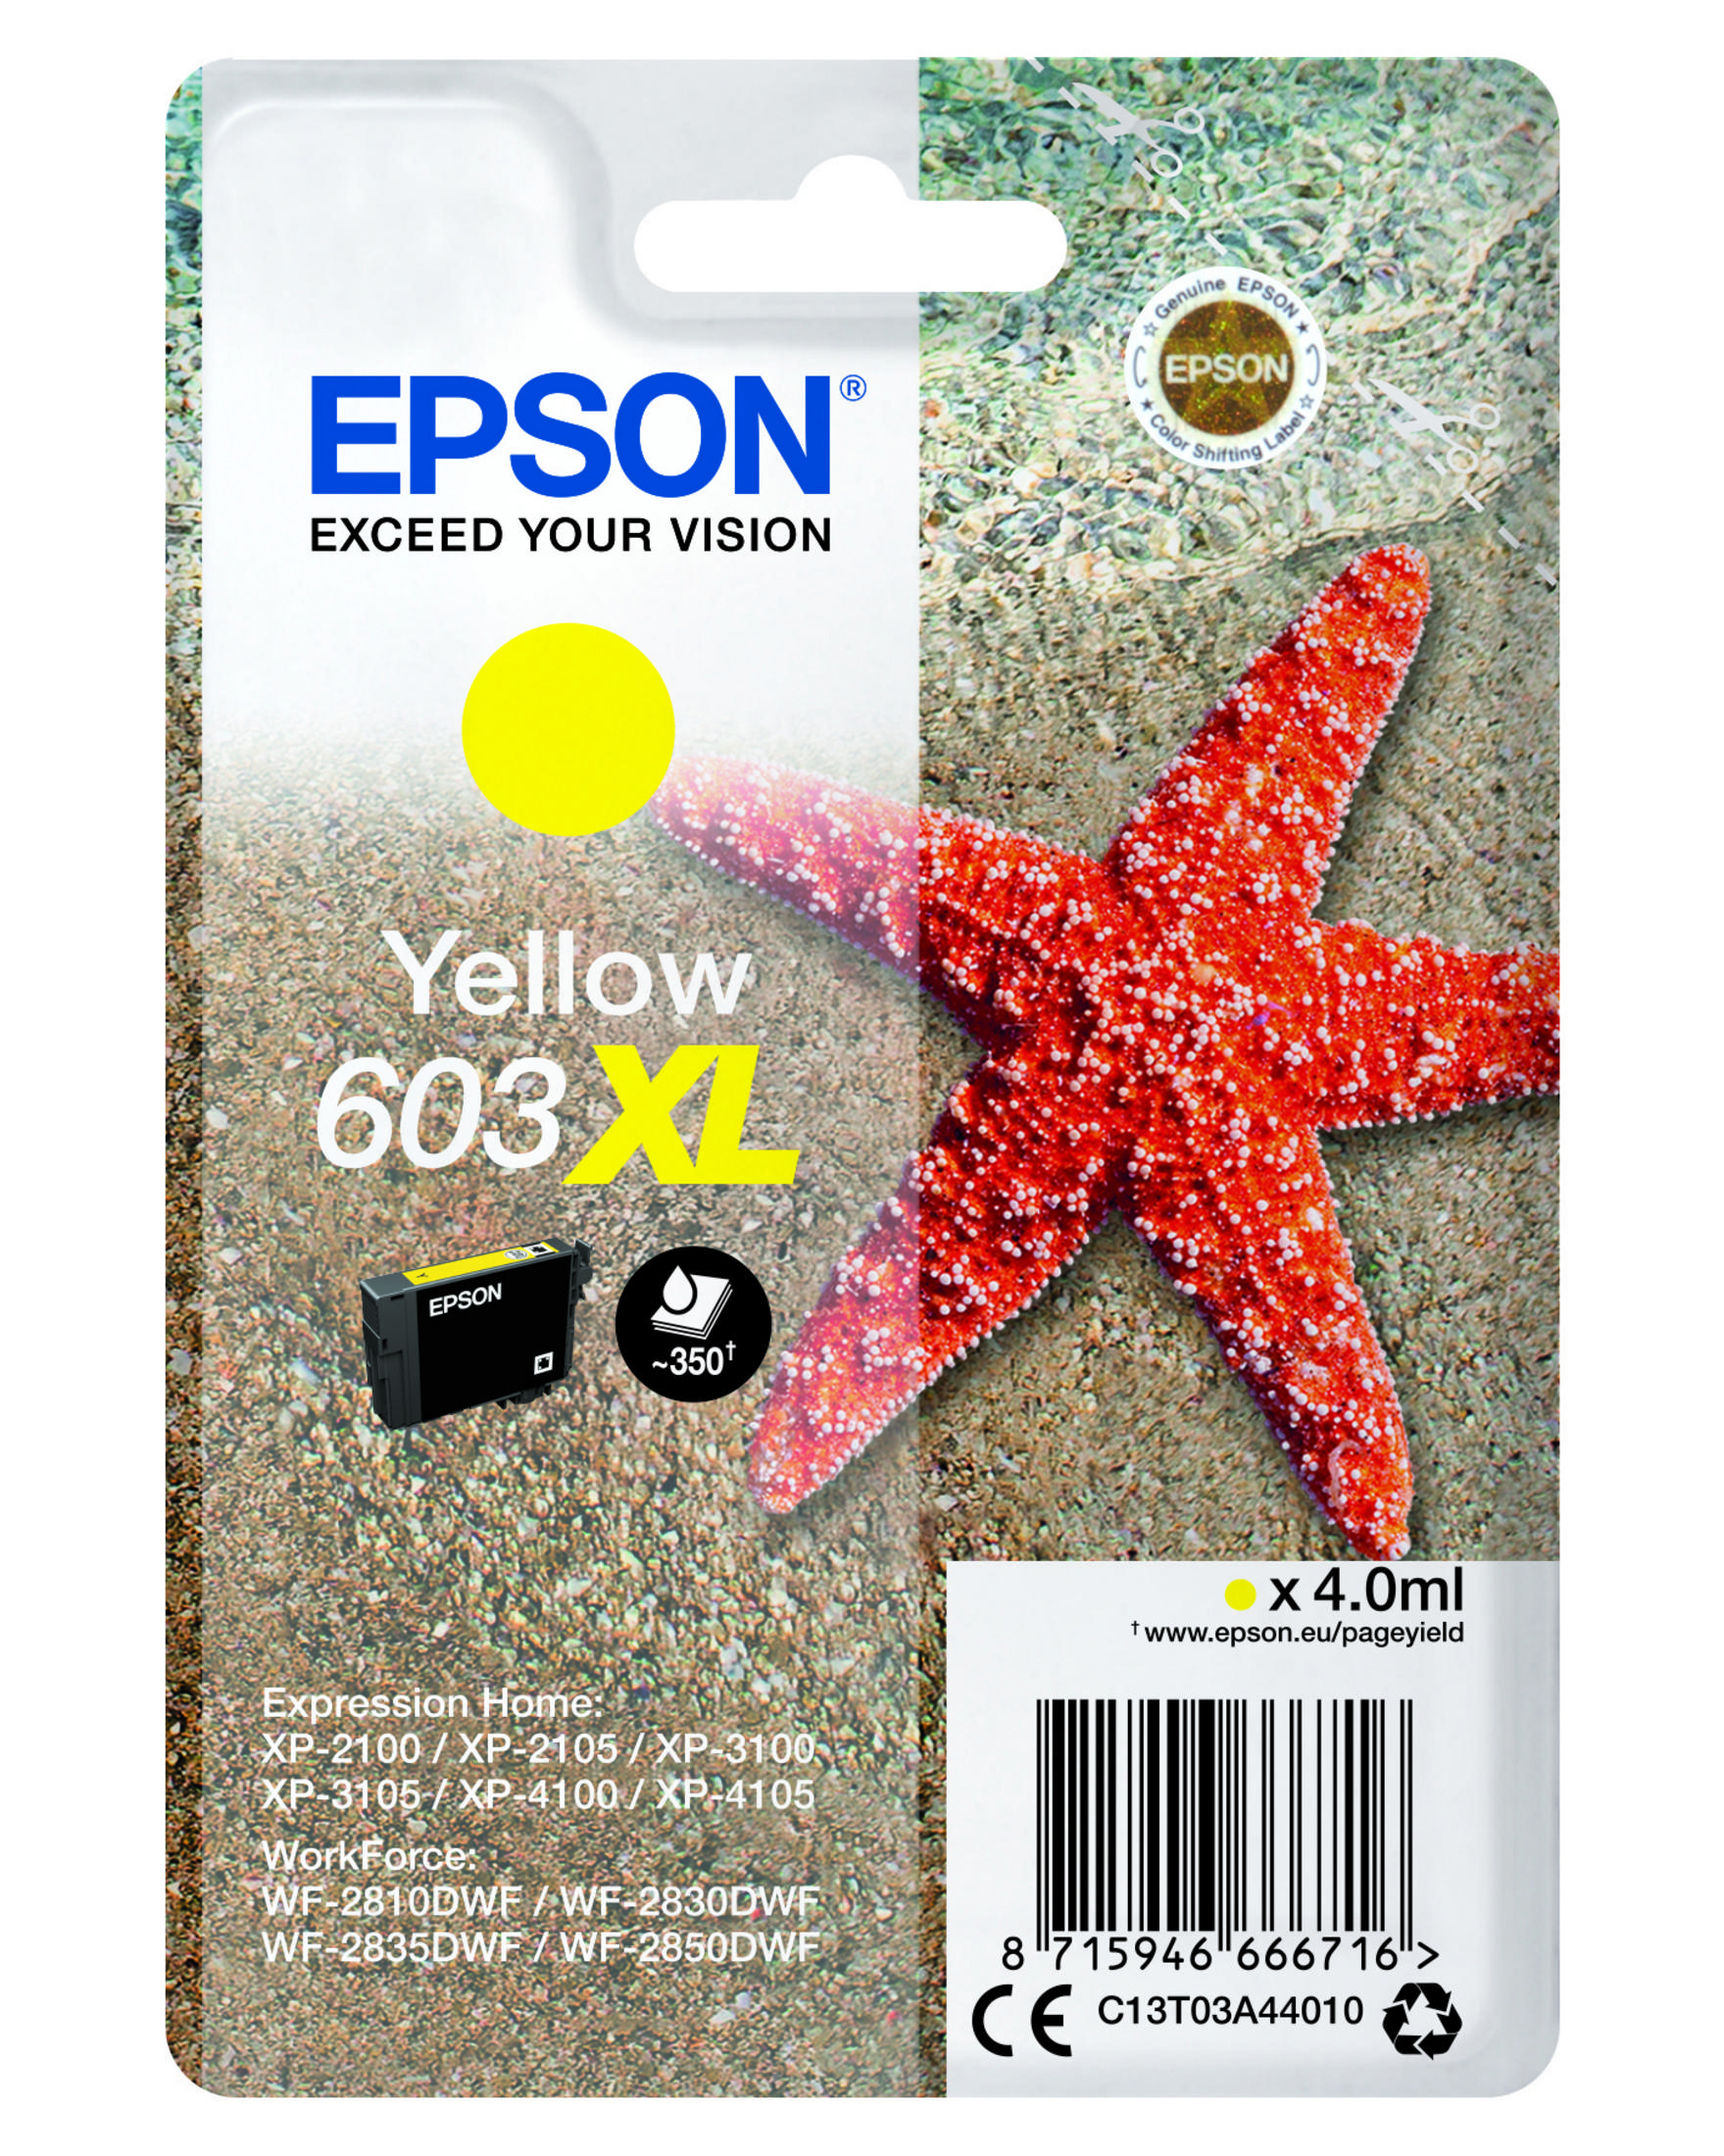 EPSON 603XL Tinte yellow (C13T03A440)